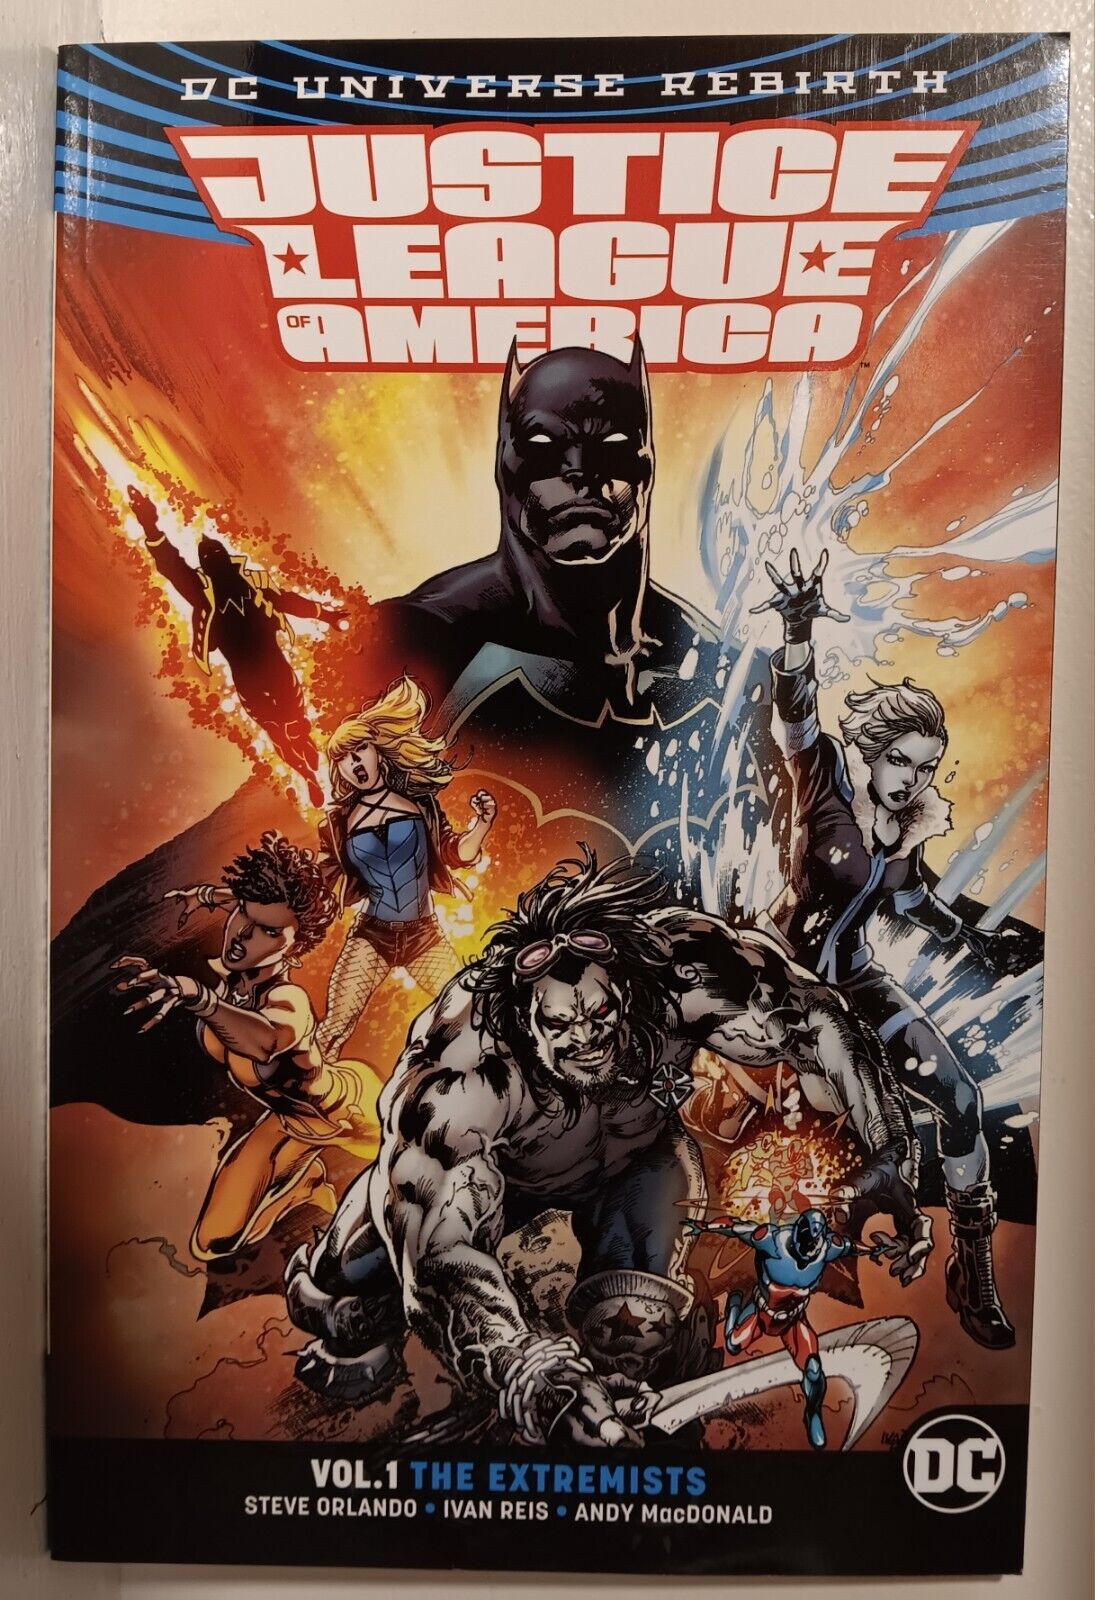 Justice League of America Rebirth Vol. 1 - (DC Comics) Brand New Trade Paperback